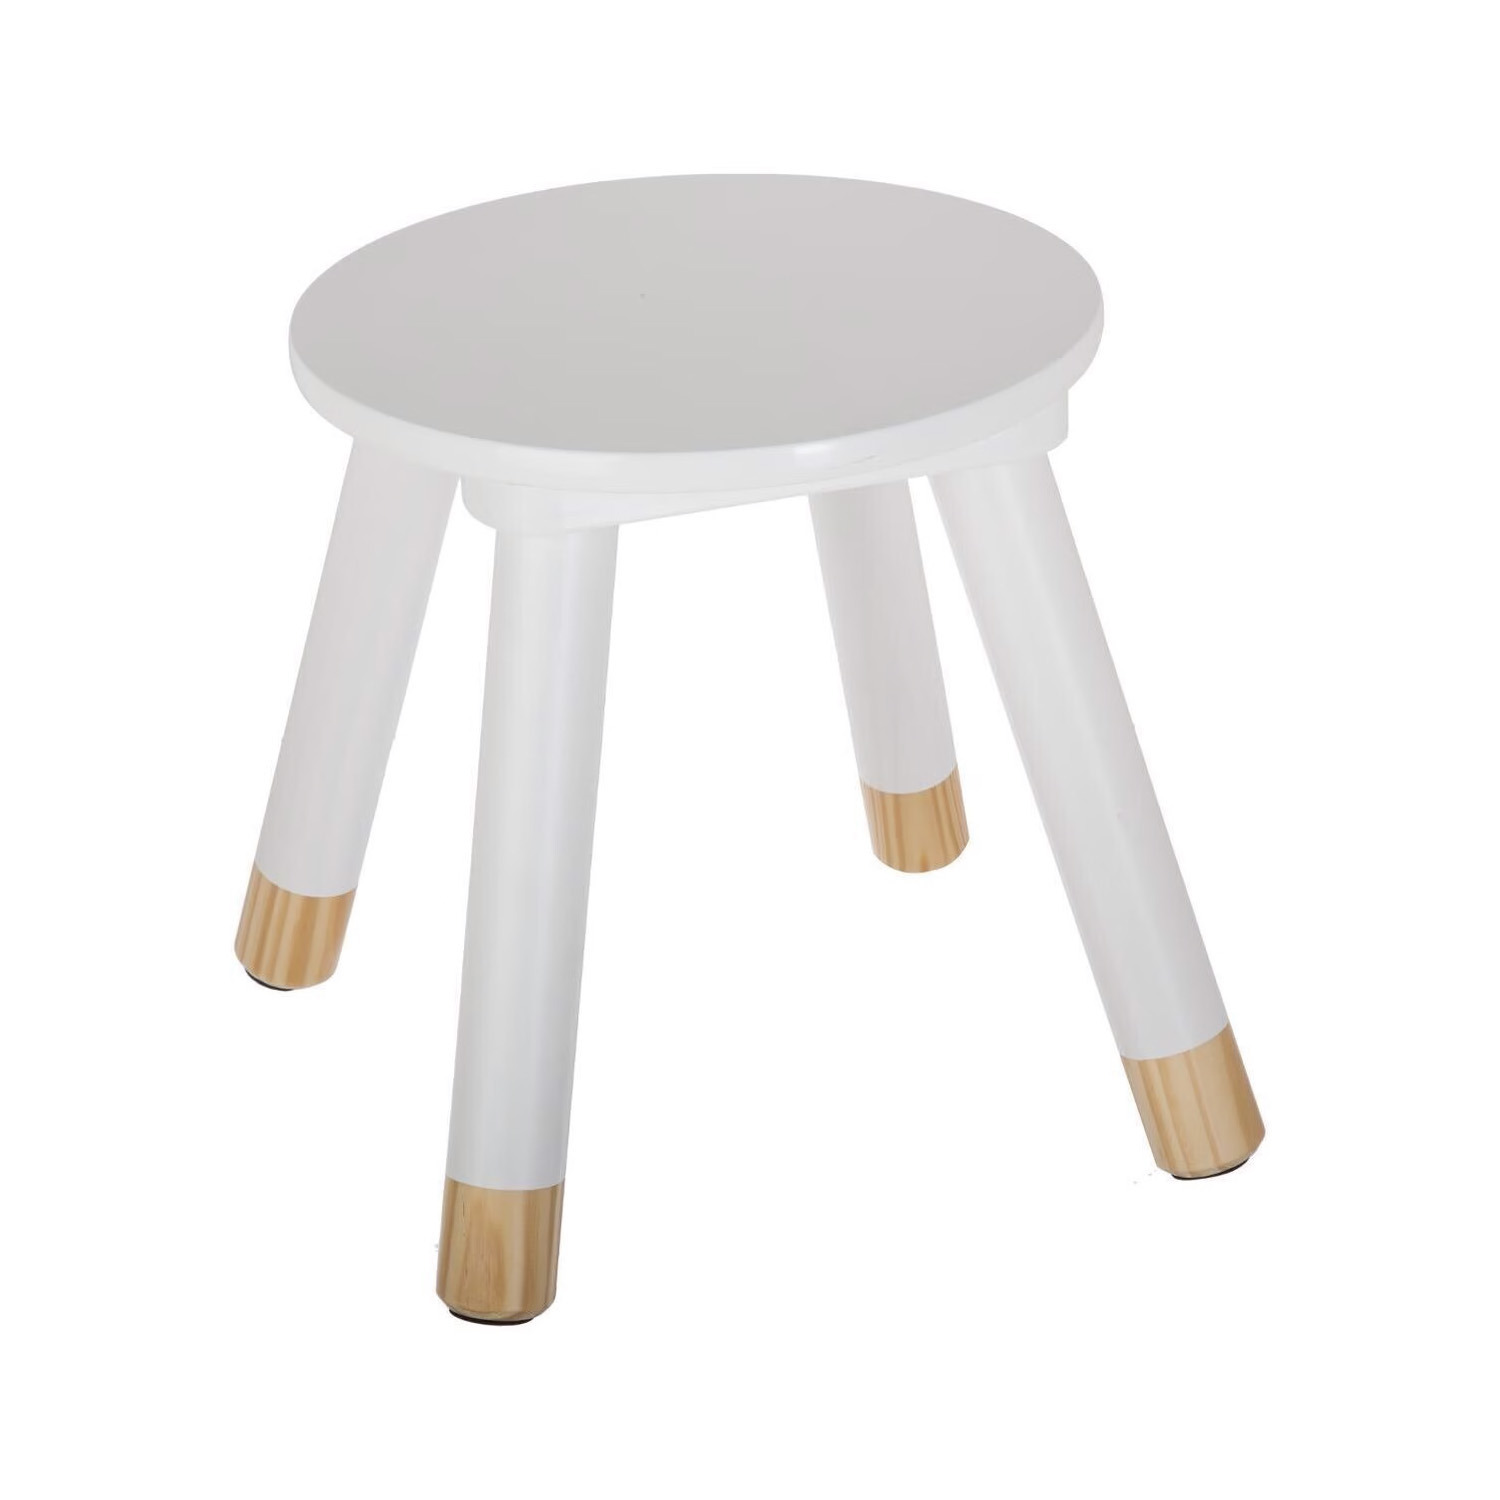 Atmosphera Kinder krukje - ivoor wit - hout - D24 x H27 cm - bijzet stoeltjes/krukken -